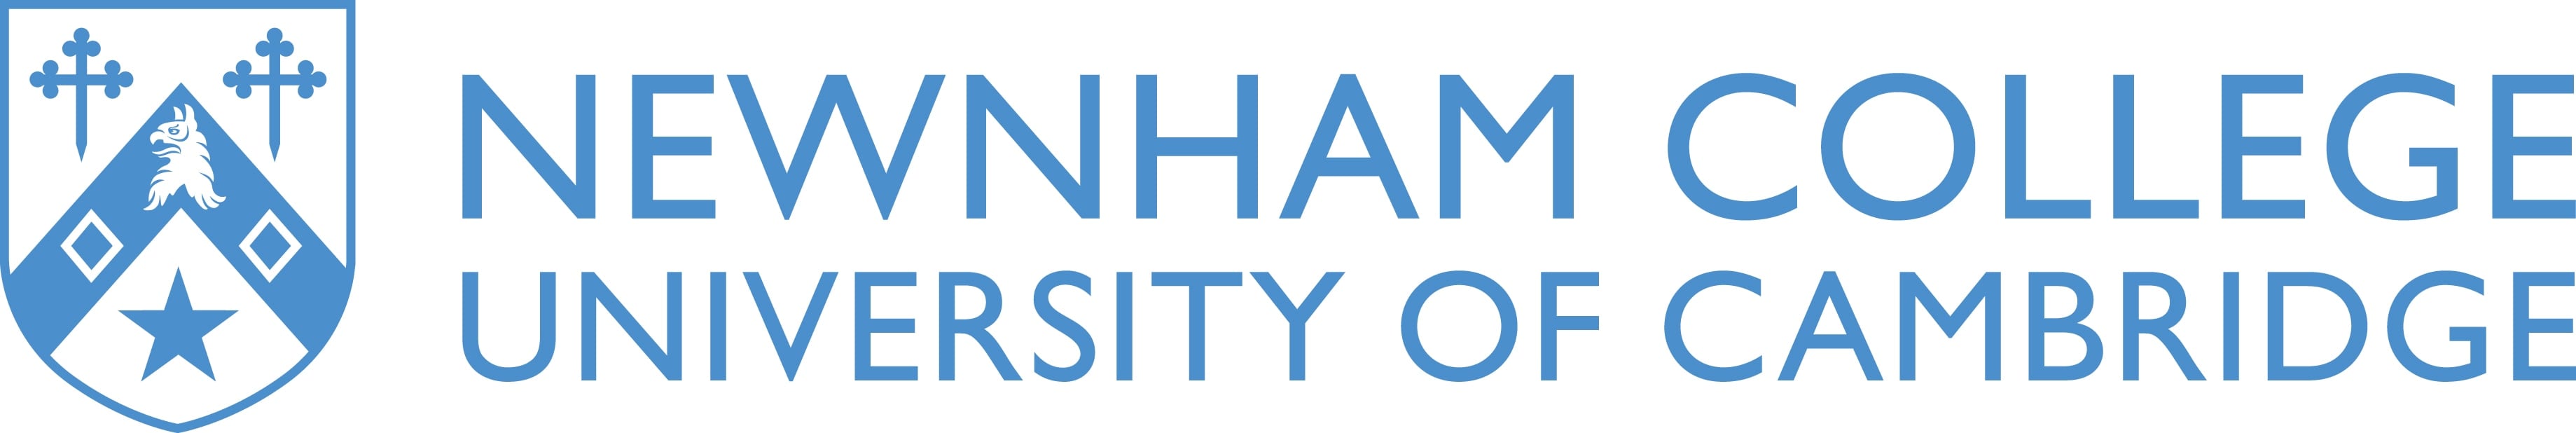 Newnham college logo